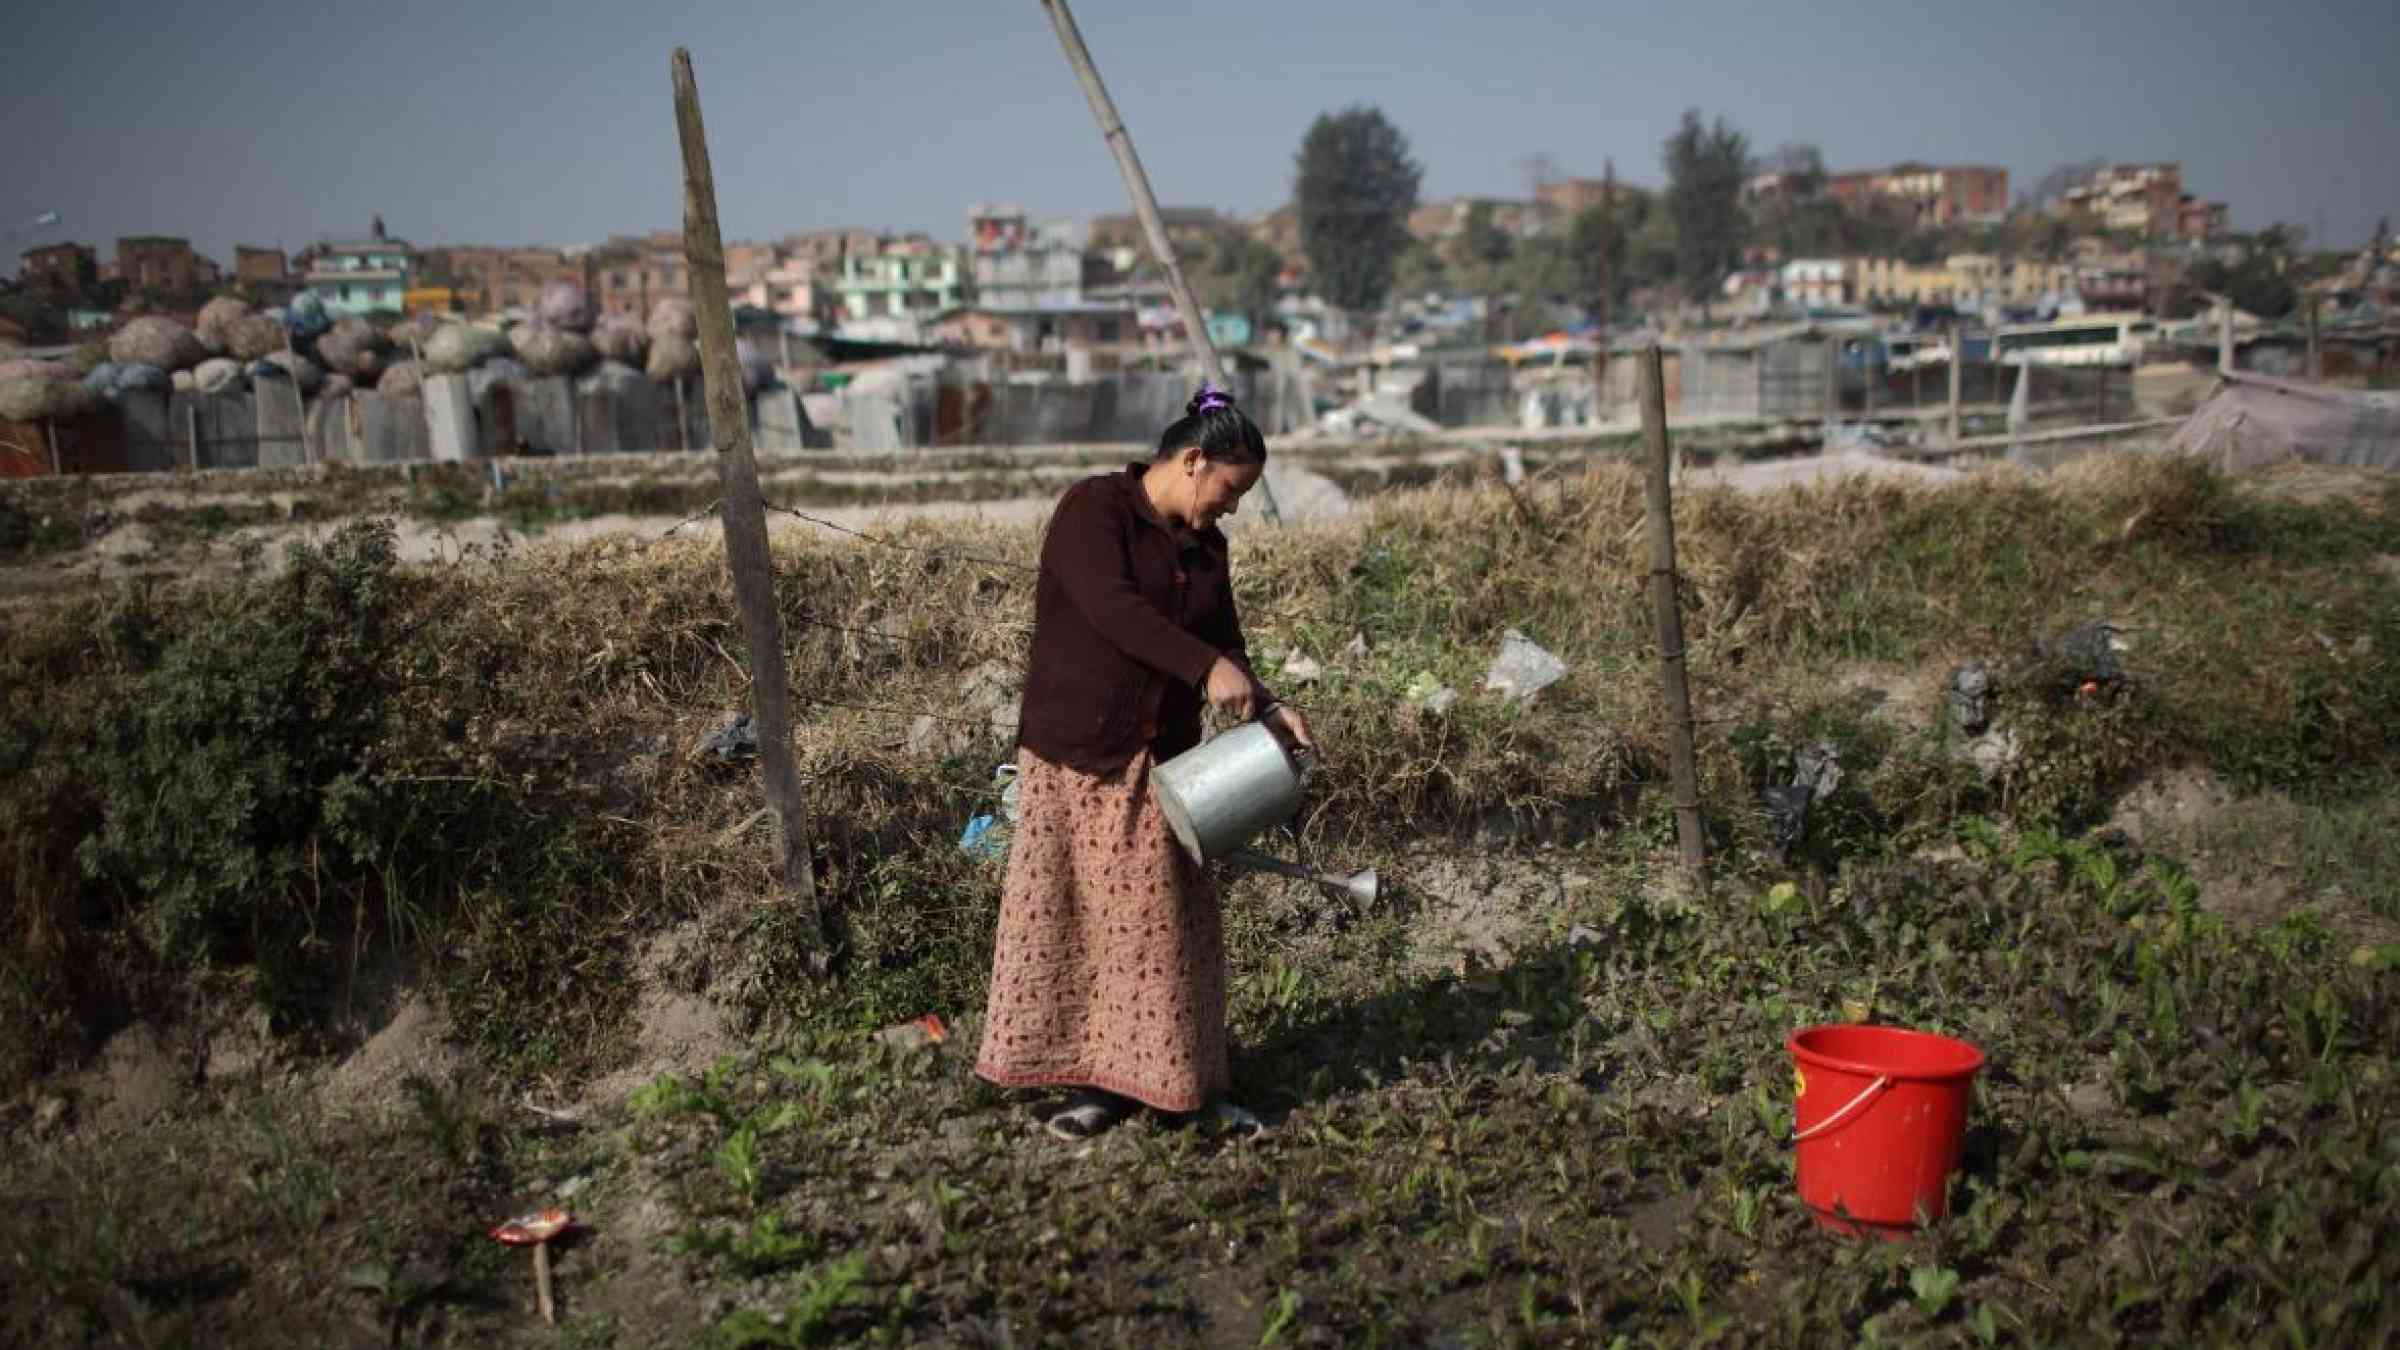 Woman watering plants. Nepal. Tom Van Cakenberghe/ IWMI http://bit.ly/3cyLQjU